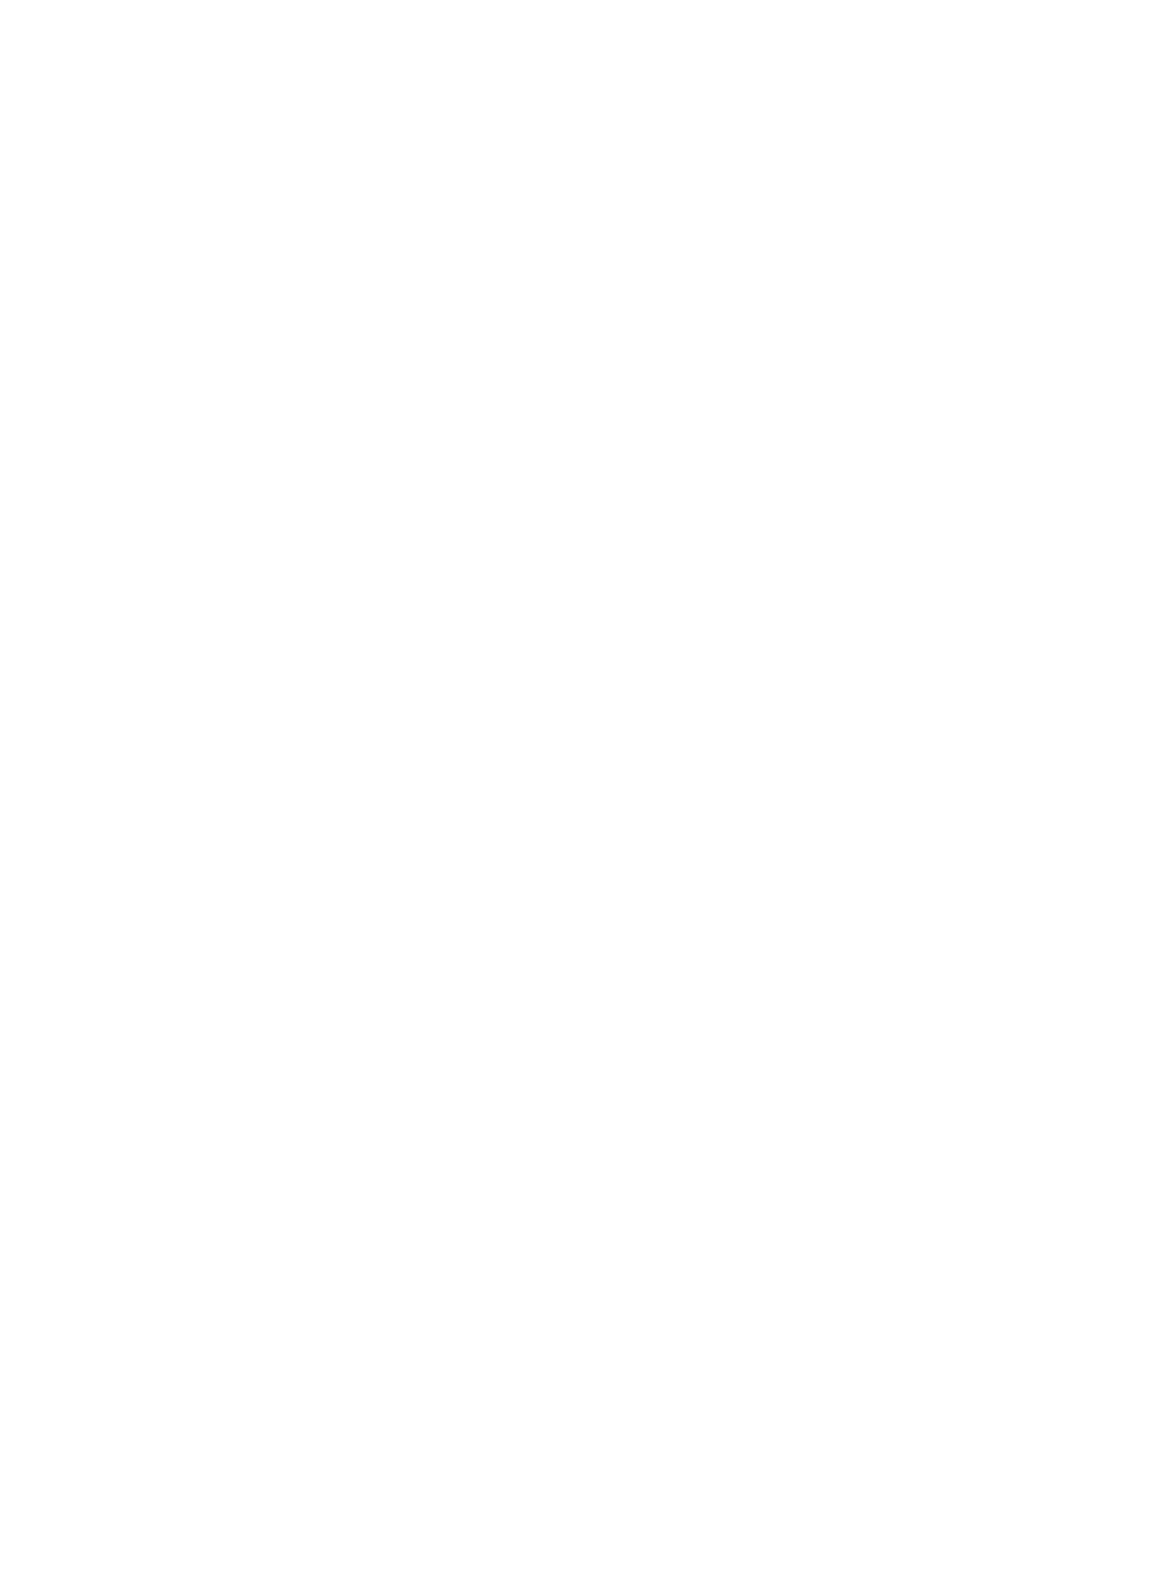 Solaris Oilfield Infrastructure logo for dark backgrounds (transparent PNG)